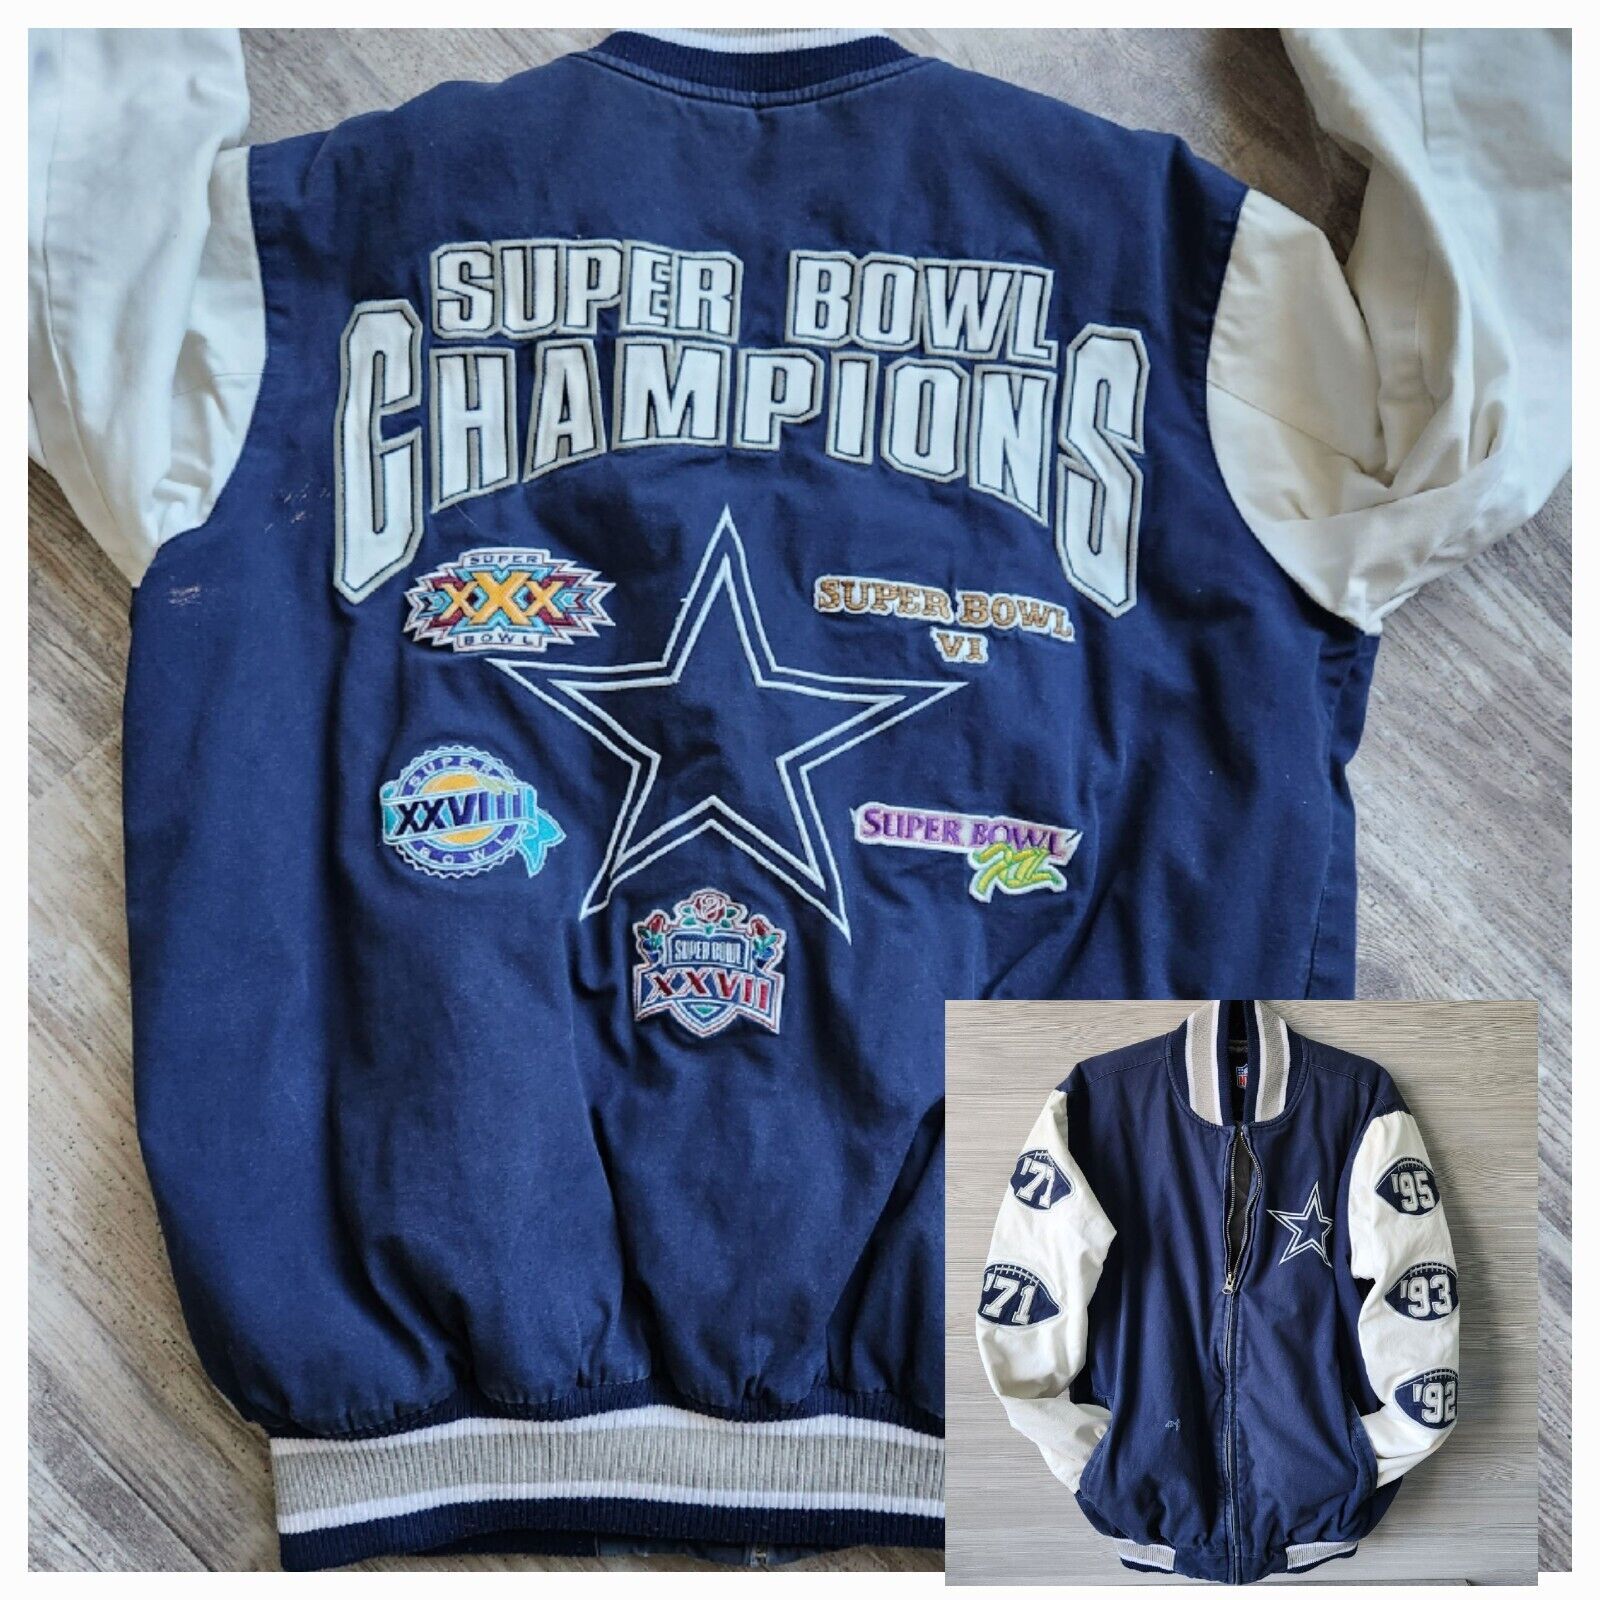 Primary image for Dallas Cowboys Super Bowl Champs Commemorative Patch Jacket Zip Blue Size M FLAW